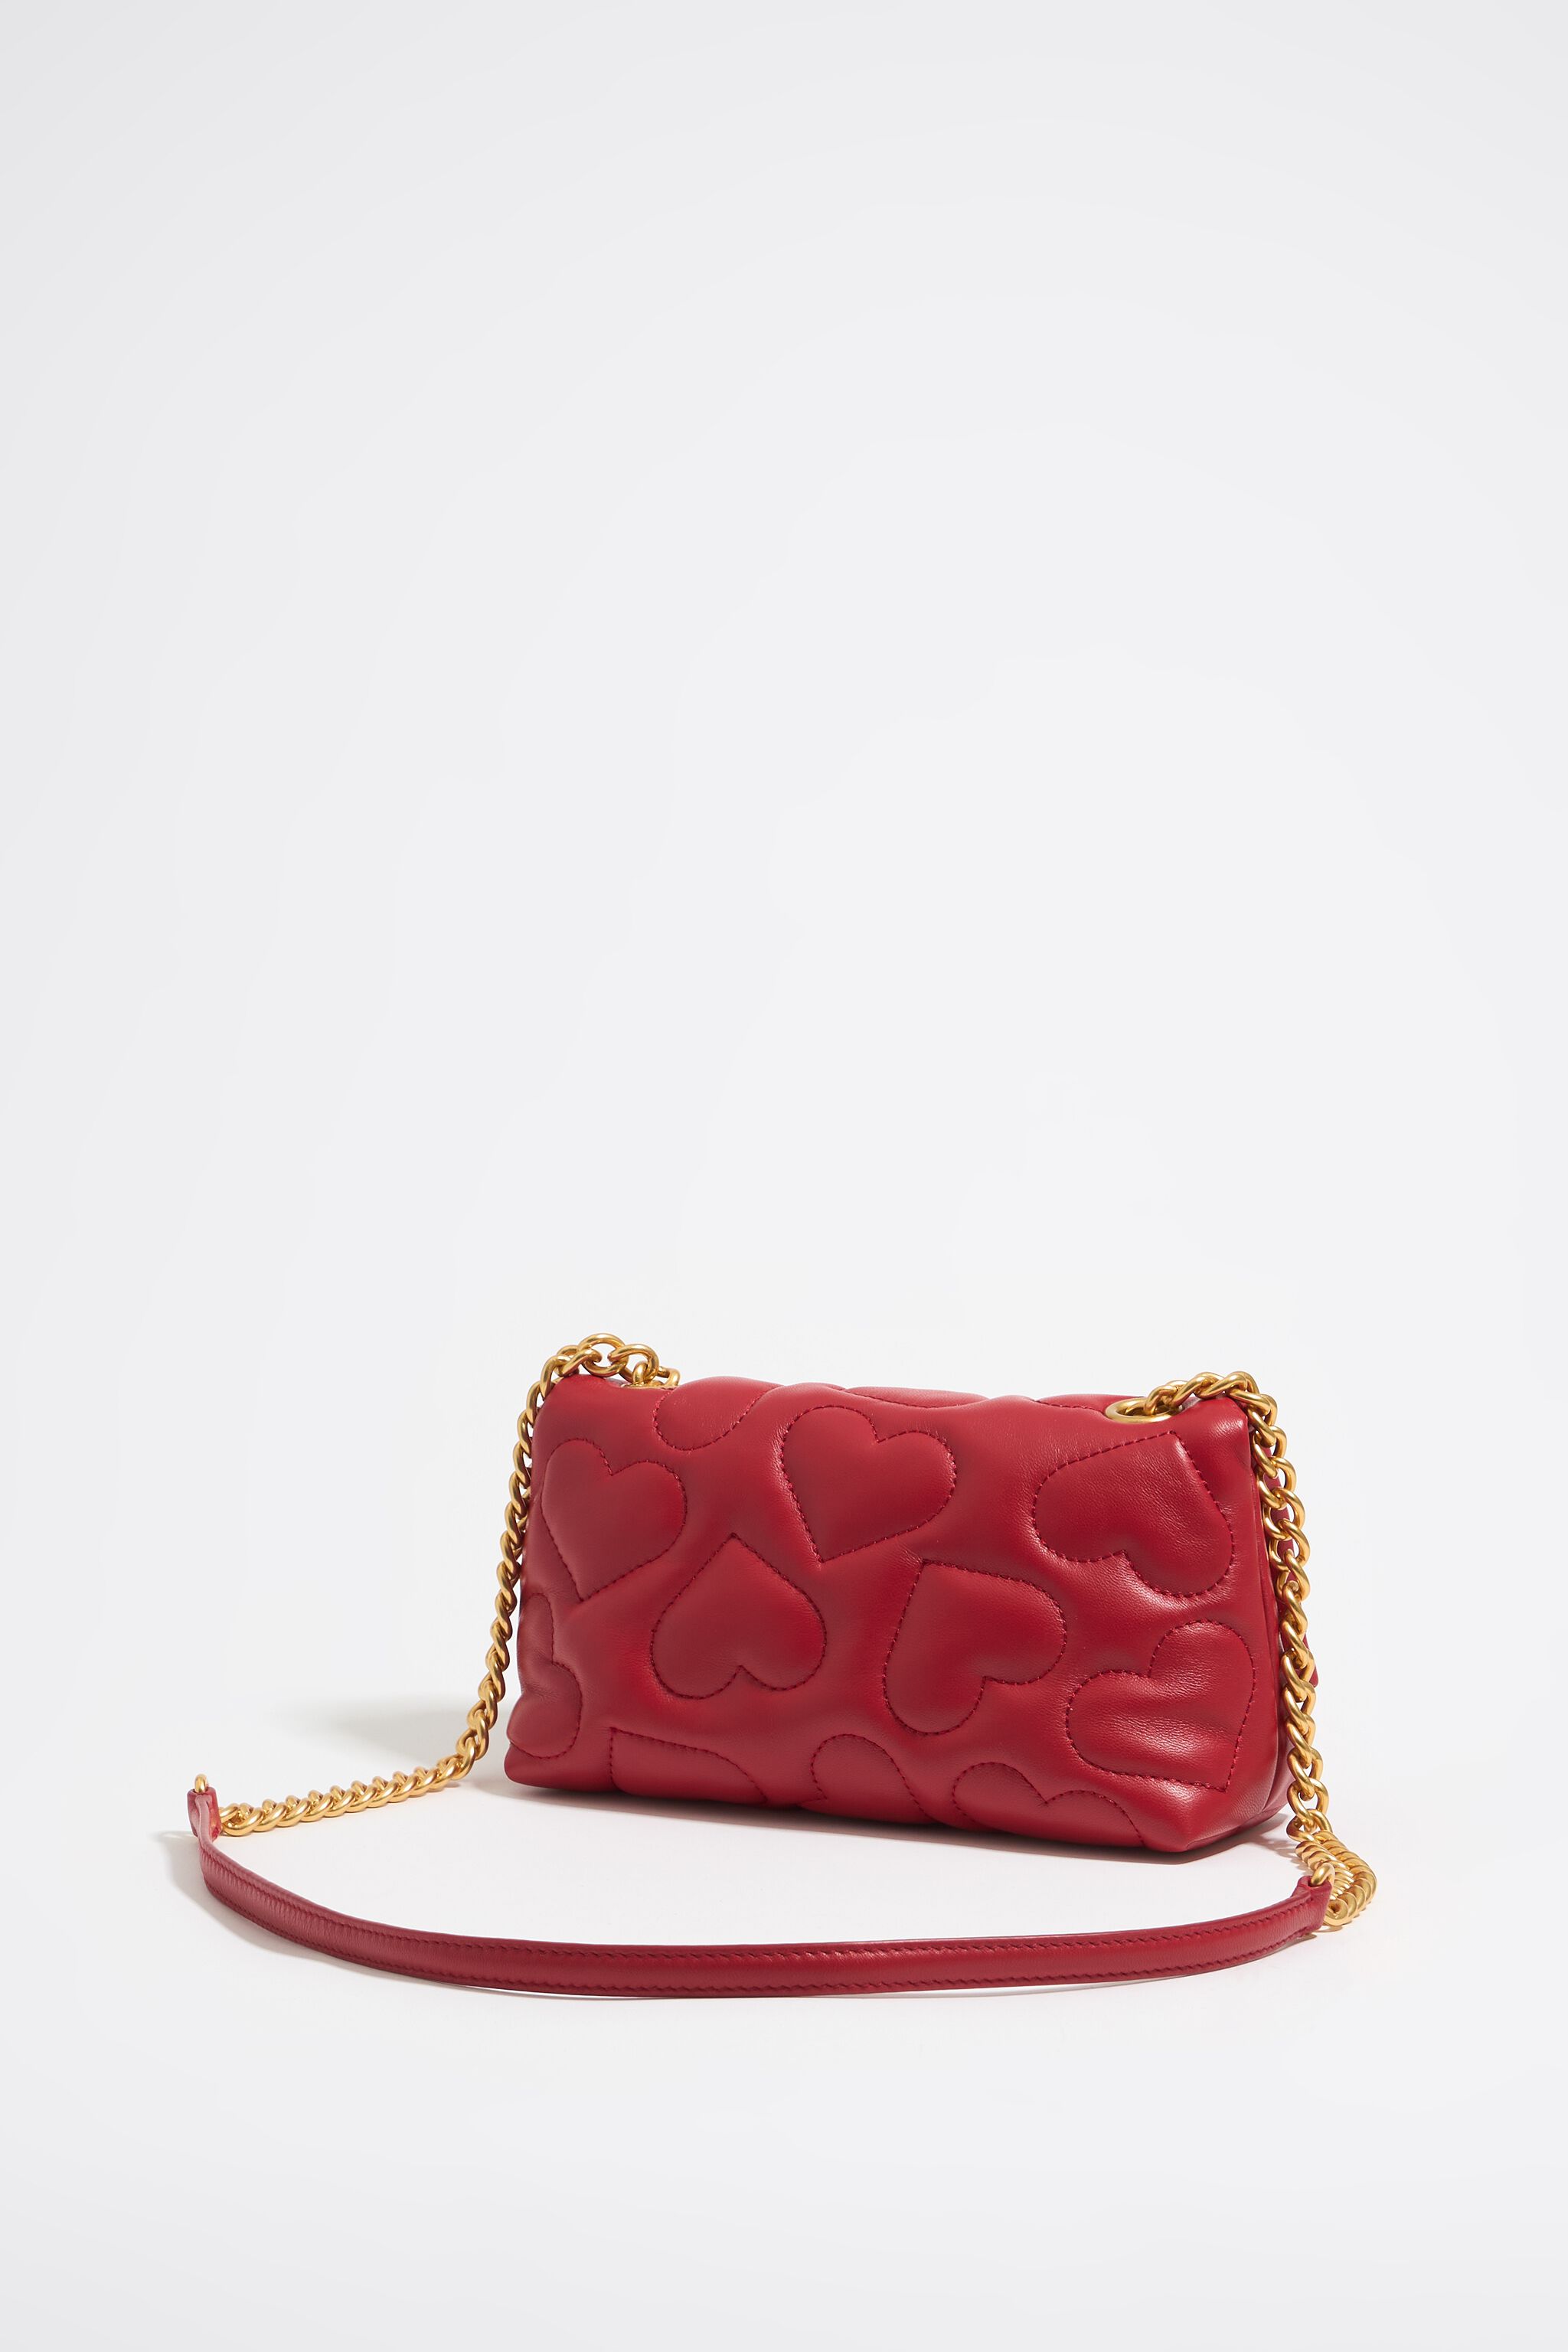 KATE SPADE Reegan Leather Top Handle Small Satchel Crossbody Handbag, Red,  NWT | eBay